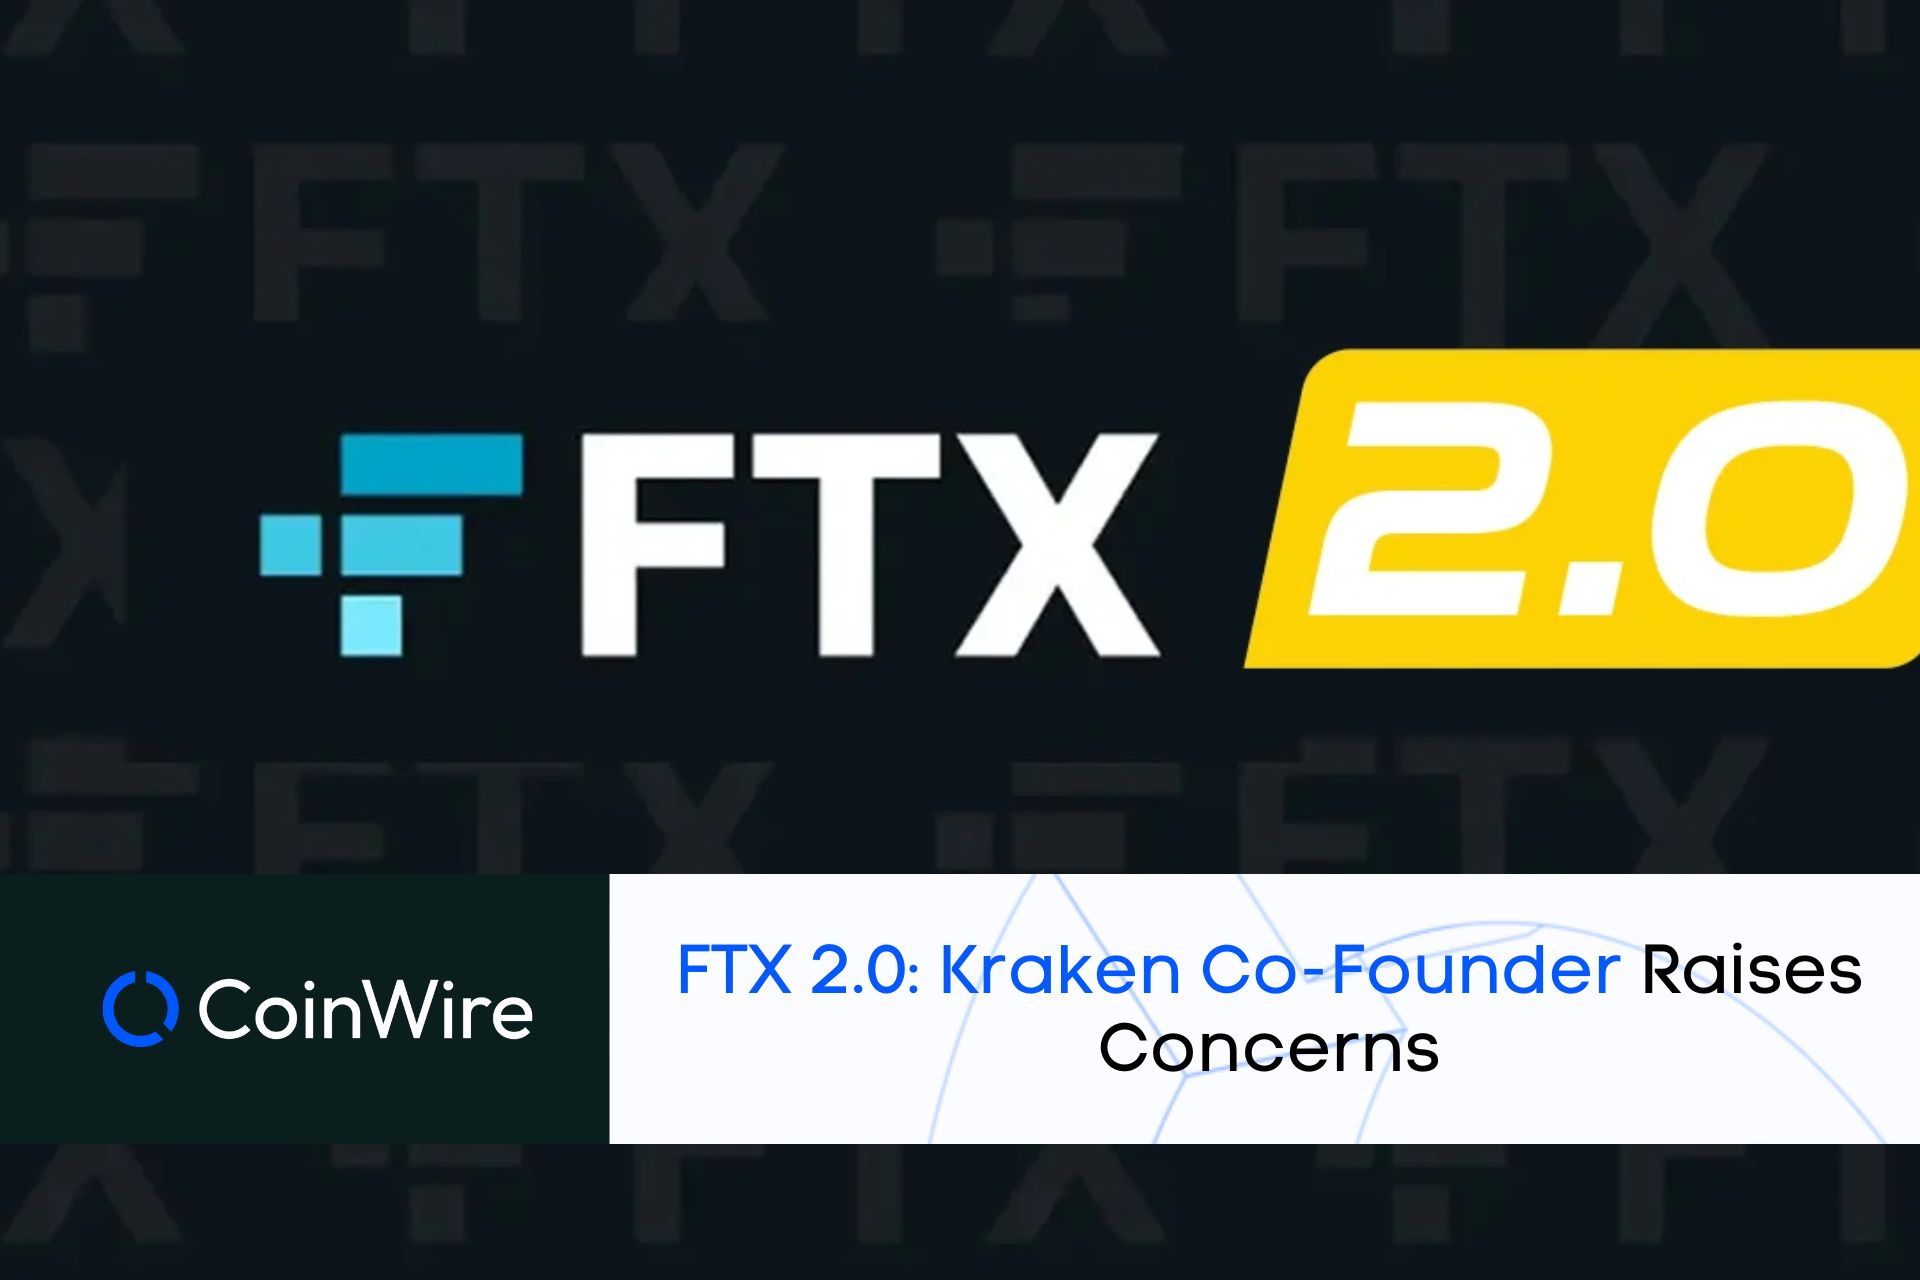 Ftx 2.0: Kraken Co-Founder Raises Concerns